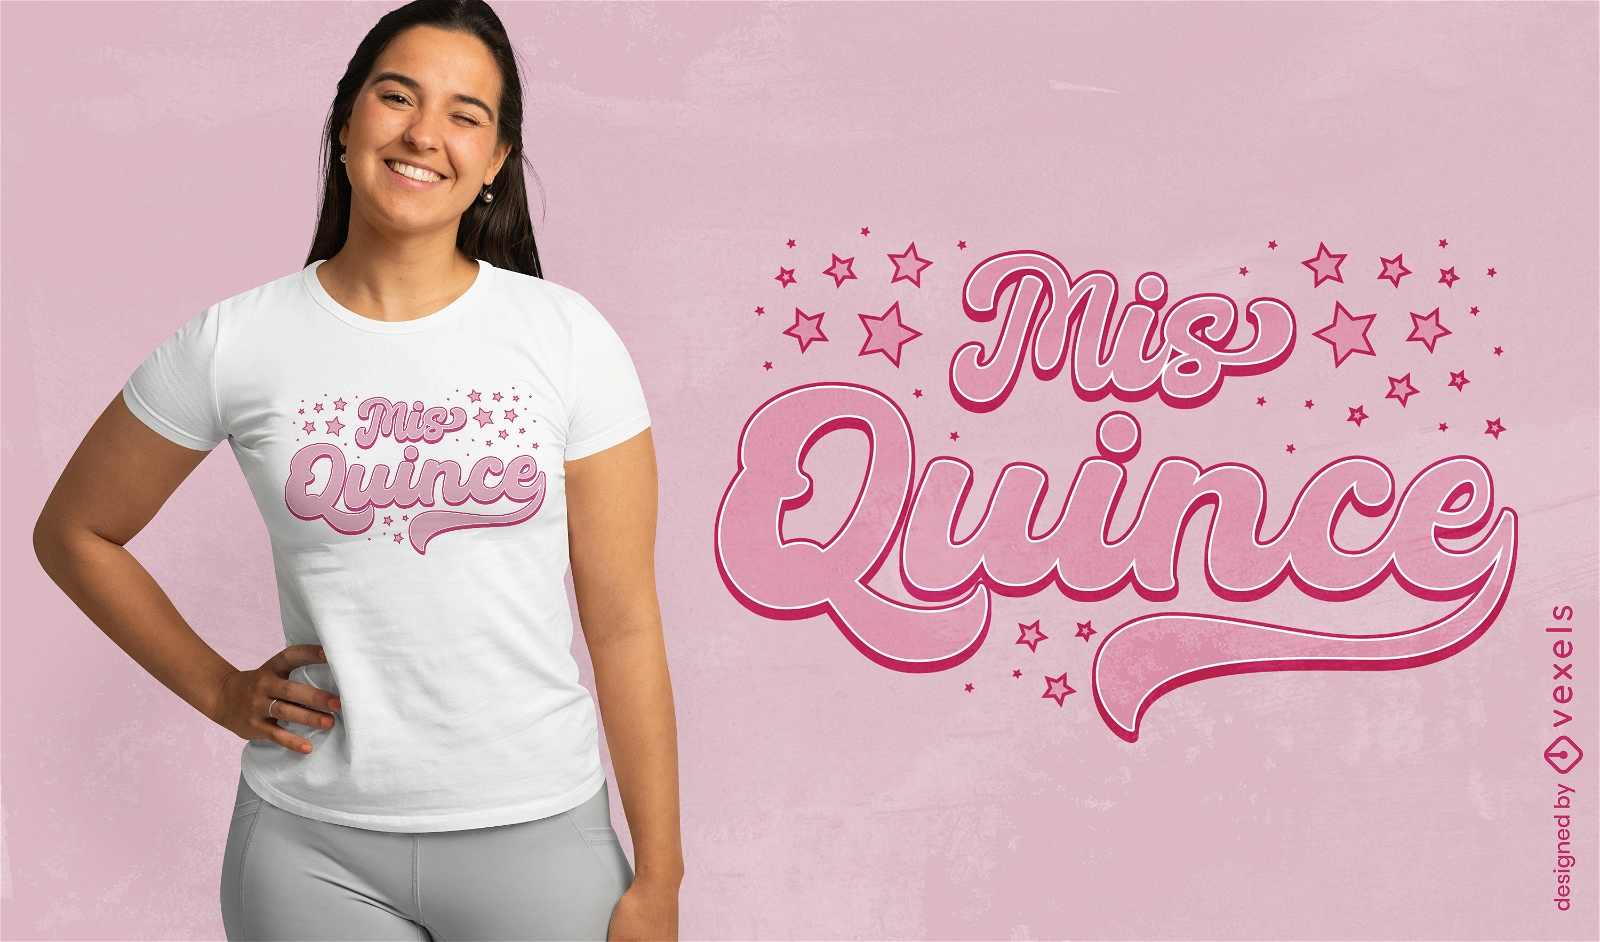 Quicnea?era pink lettering t-shirt design